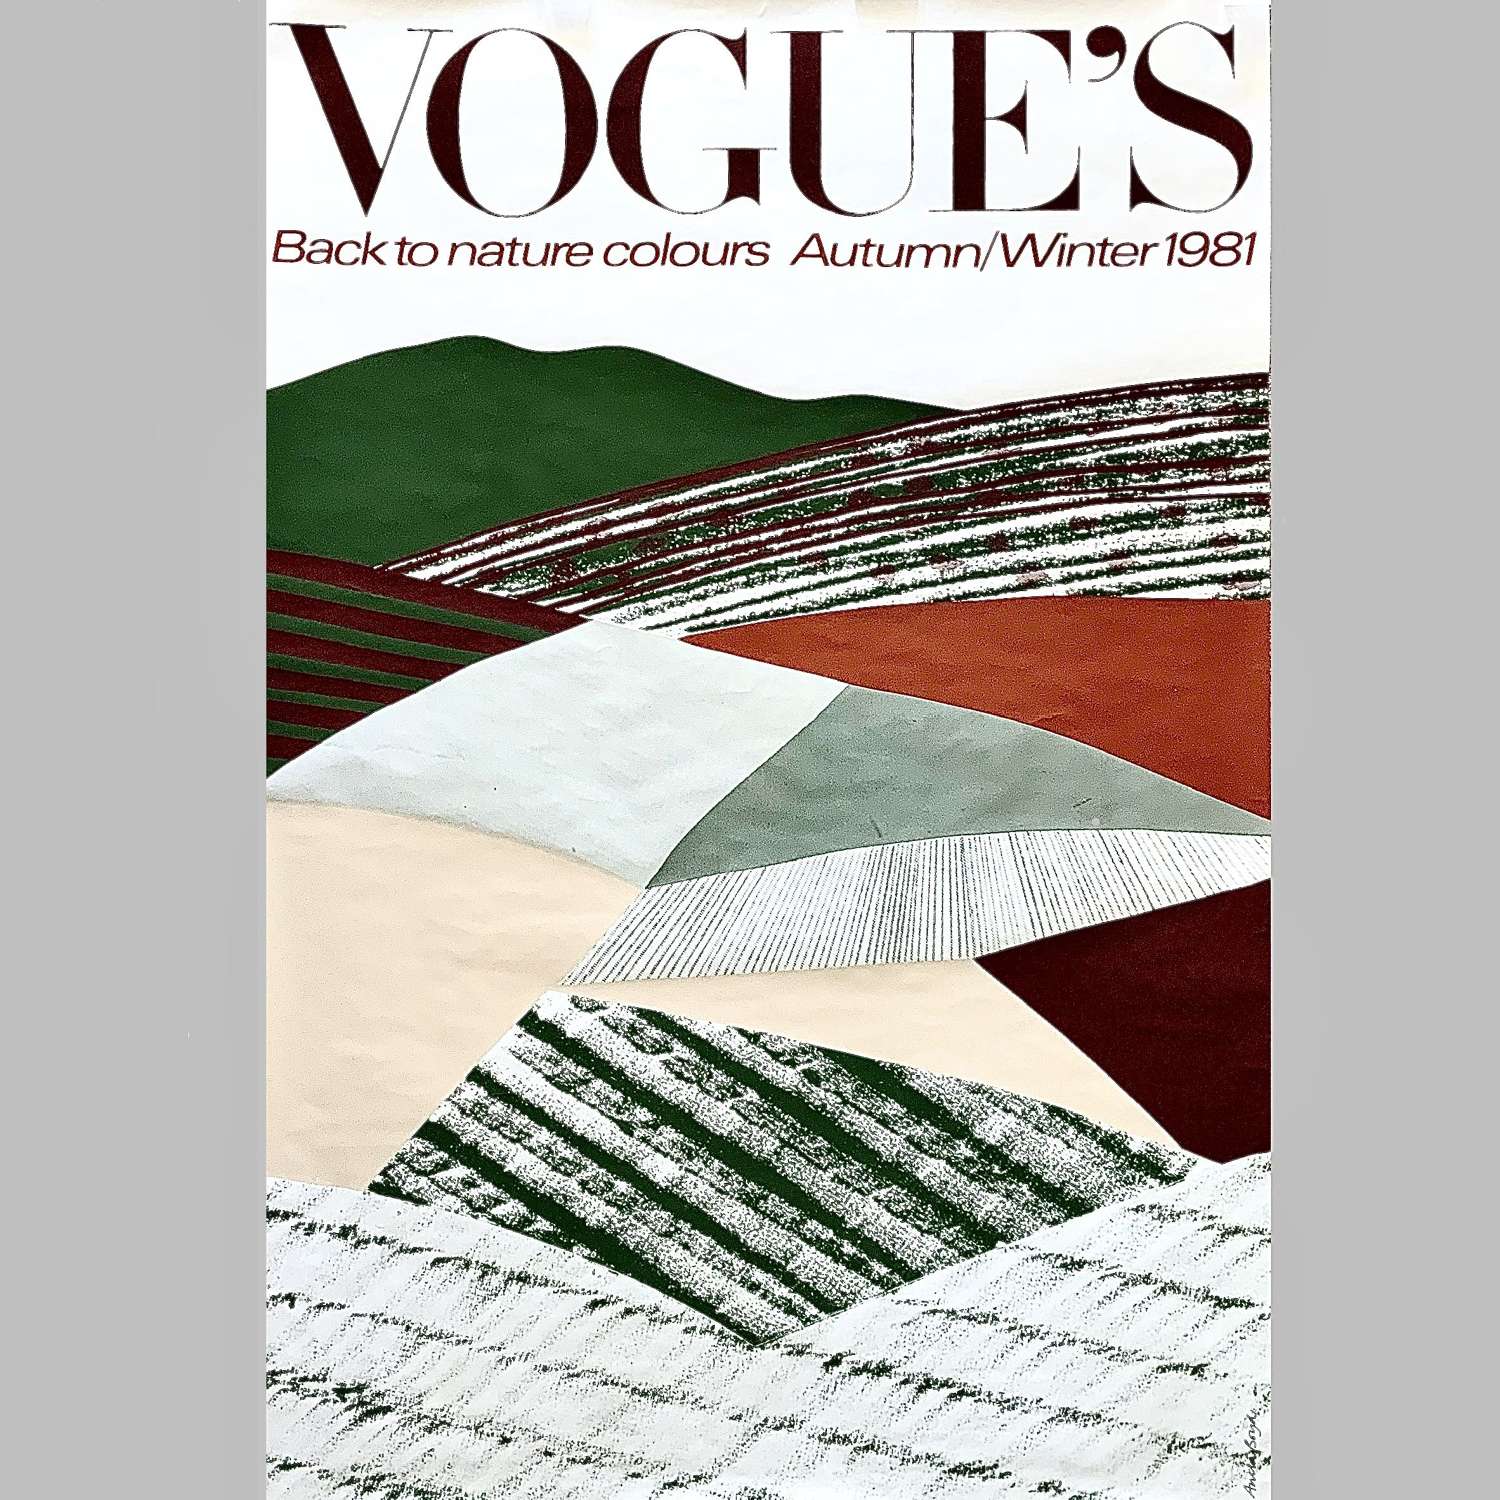 Giant Original “Vogue” Autumn Colours Publicity Poster, “Anita Boyd”